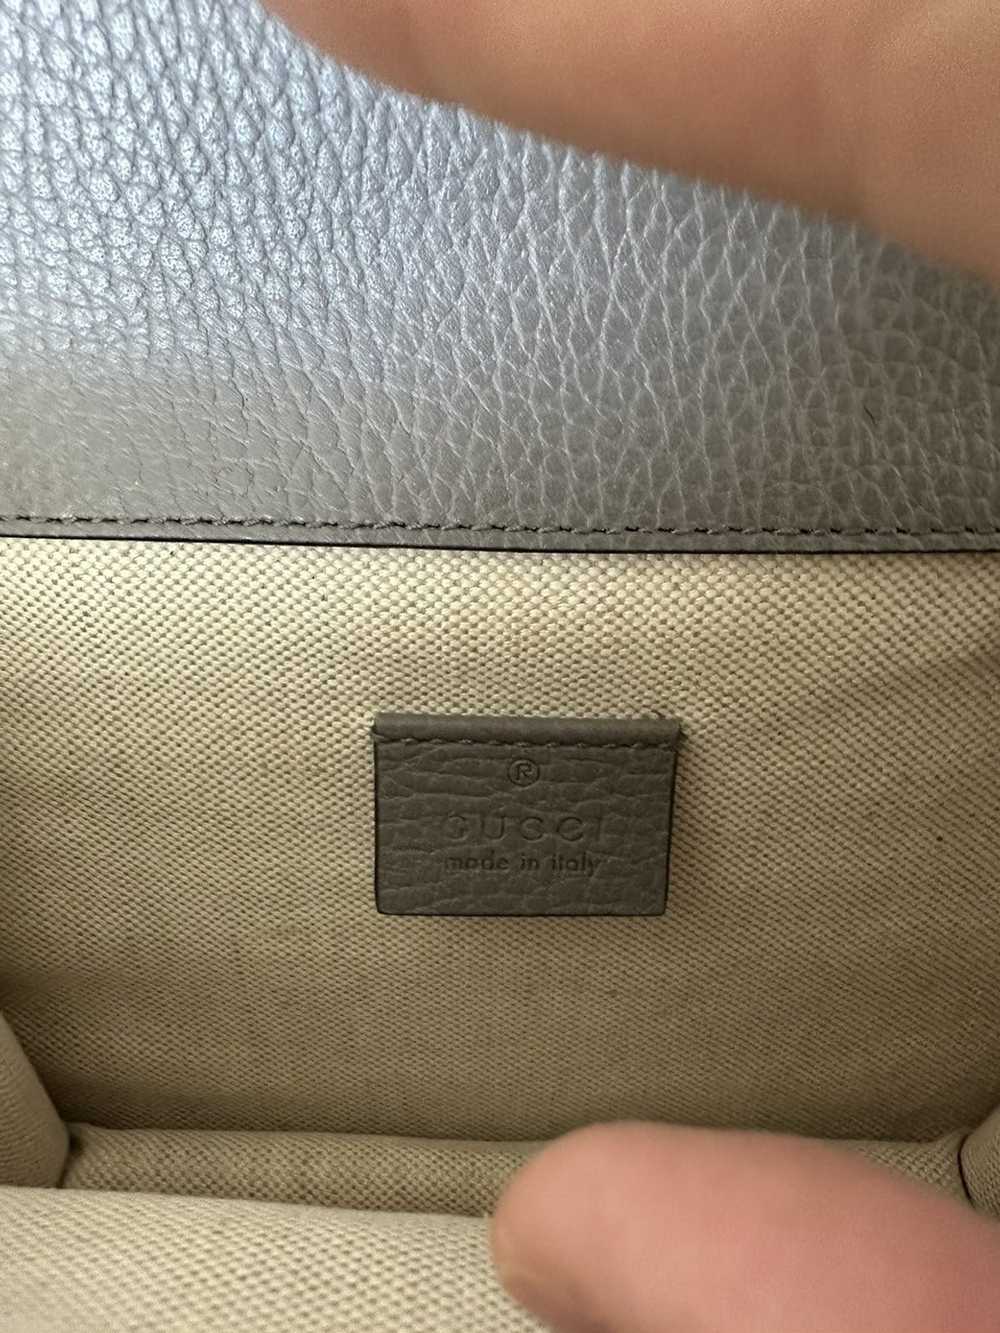 Gucci Dionysus mini leather bag. 100% authentic. … - image 10